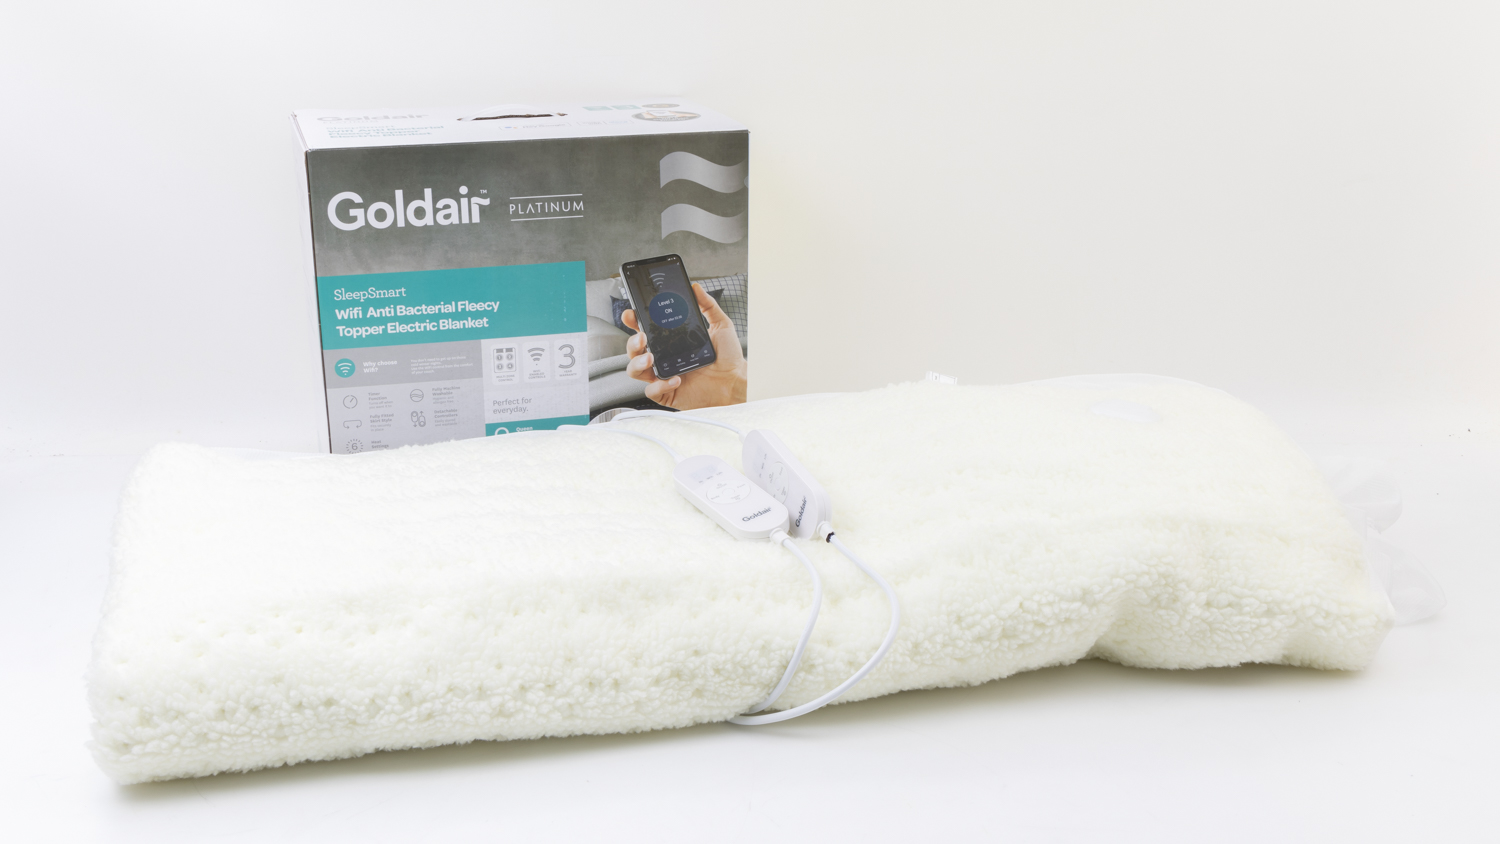 Goldair Platinum SleepSmart Wifi Anti Bacterial Fleecy Topper Electric Blanket GPFAEB-Q carousel image